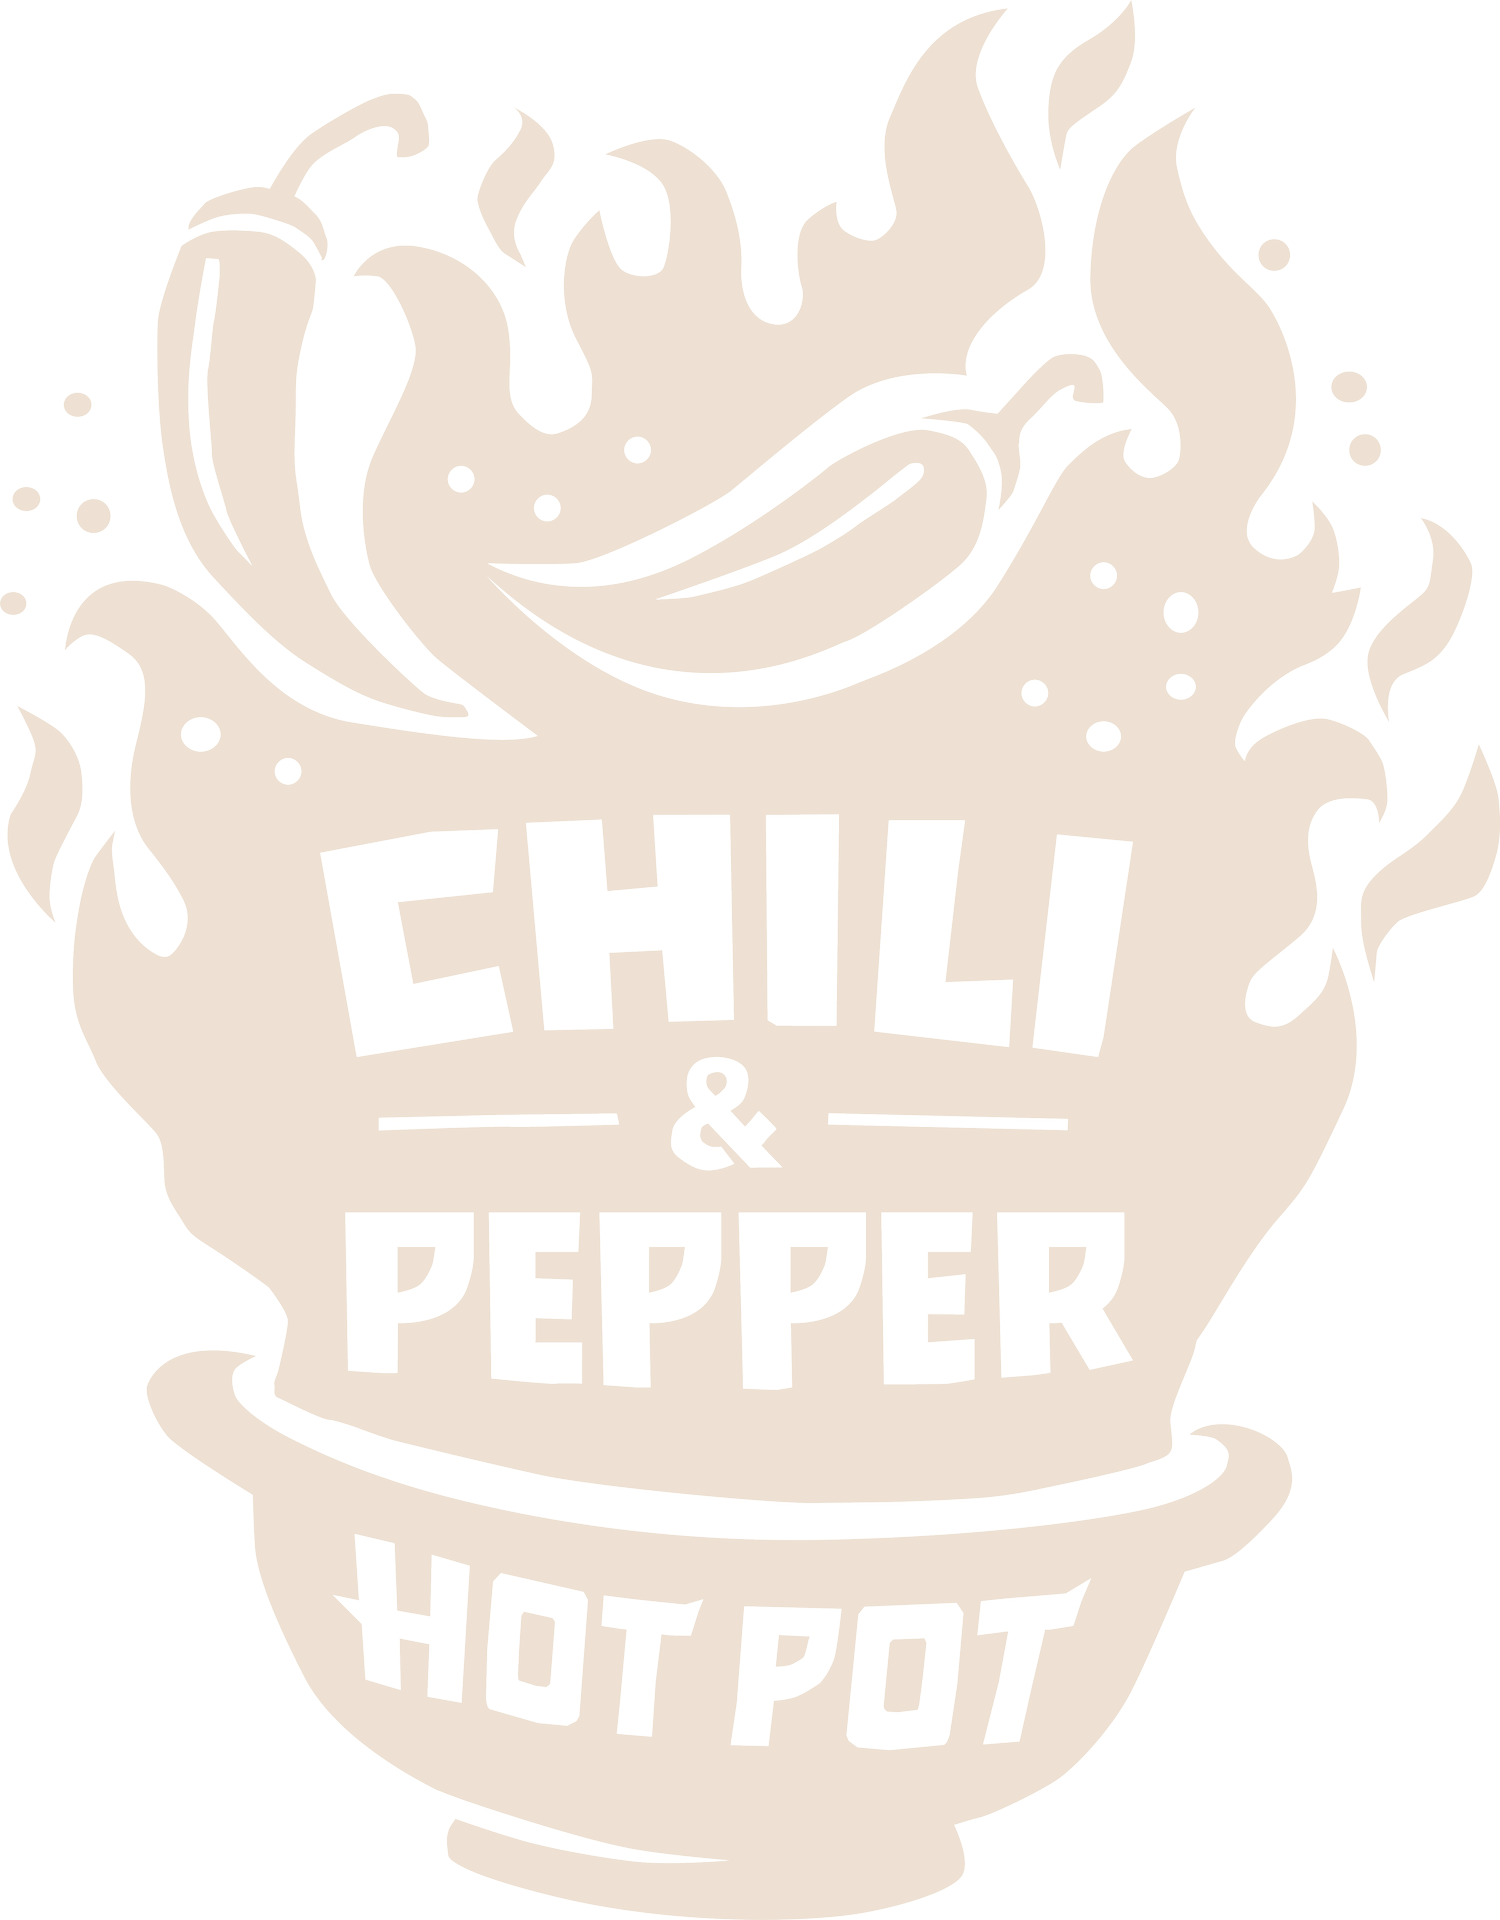 Chili &amp; Pepper